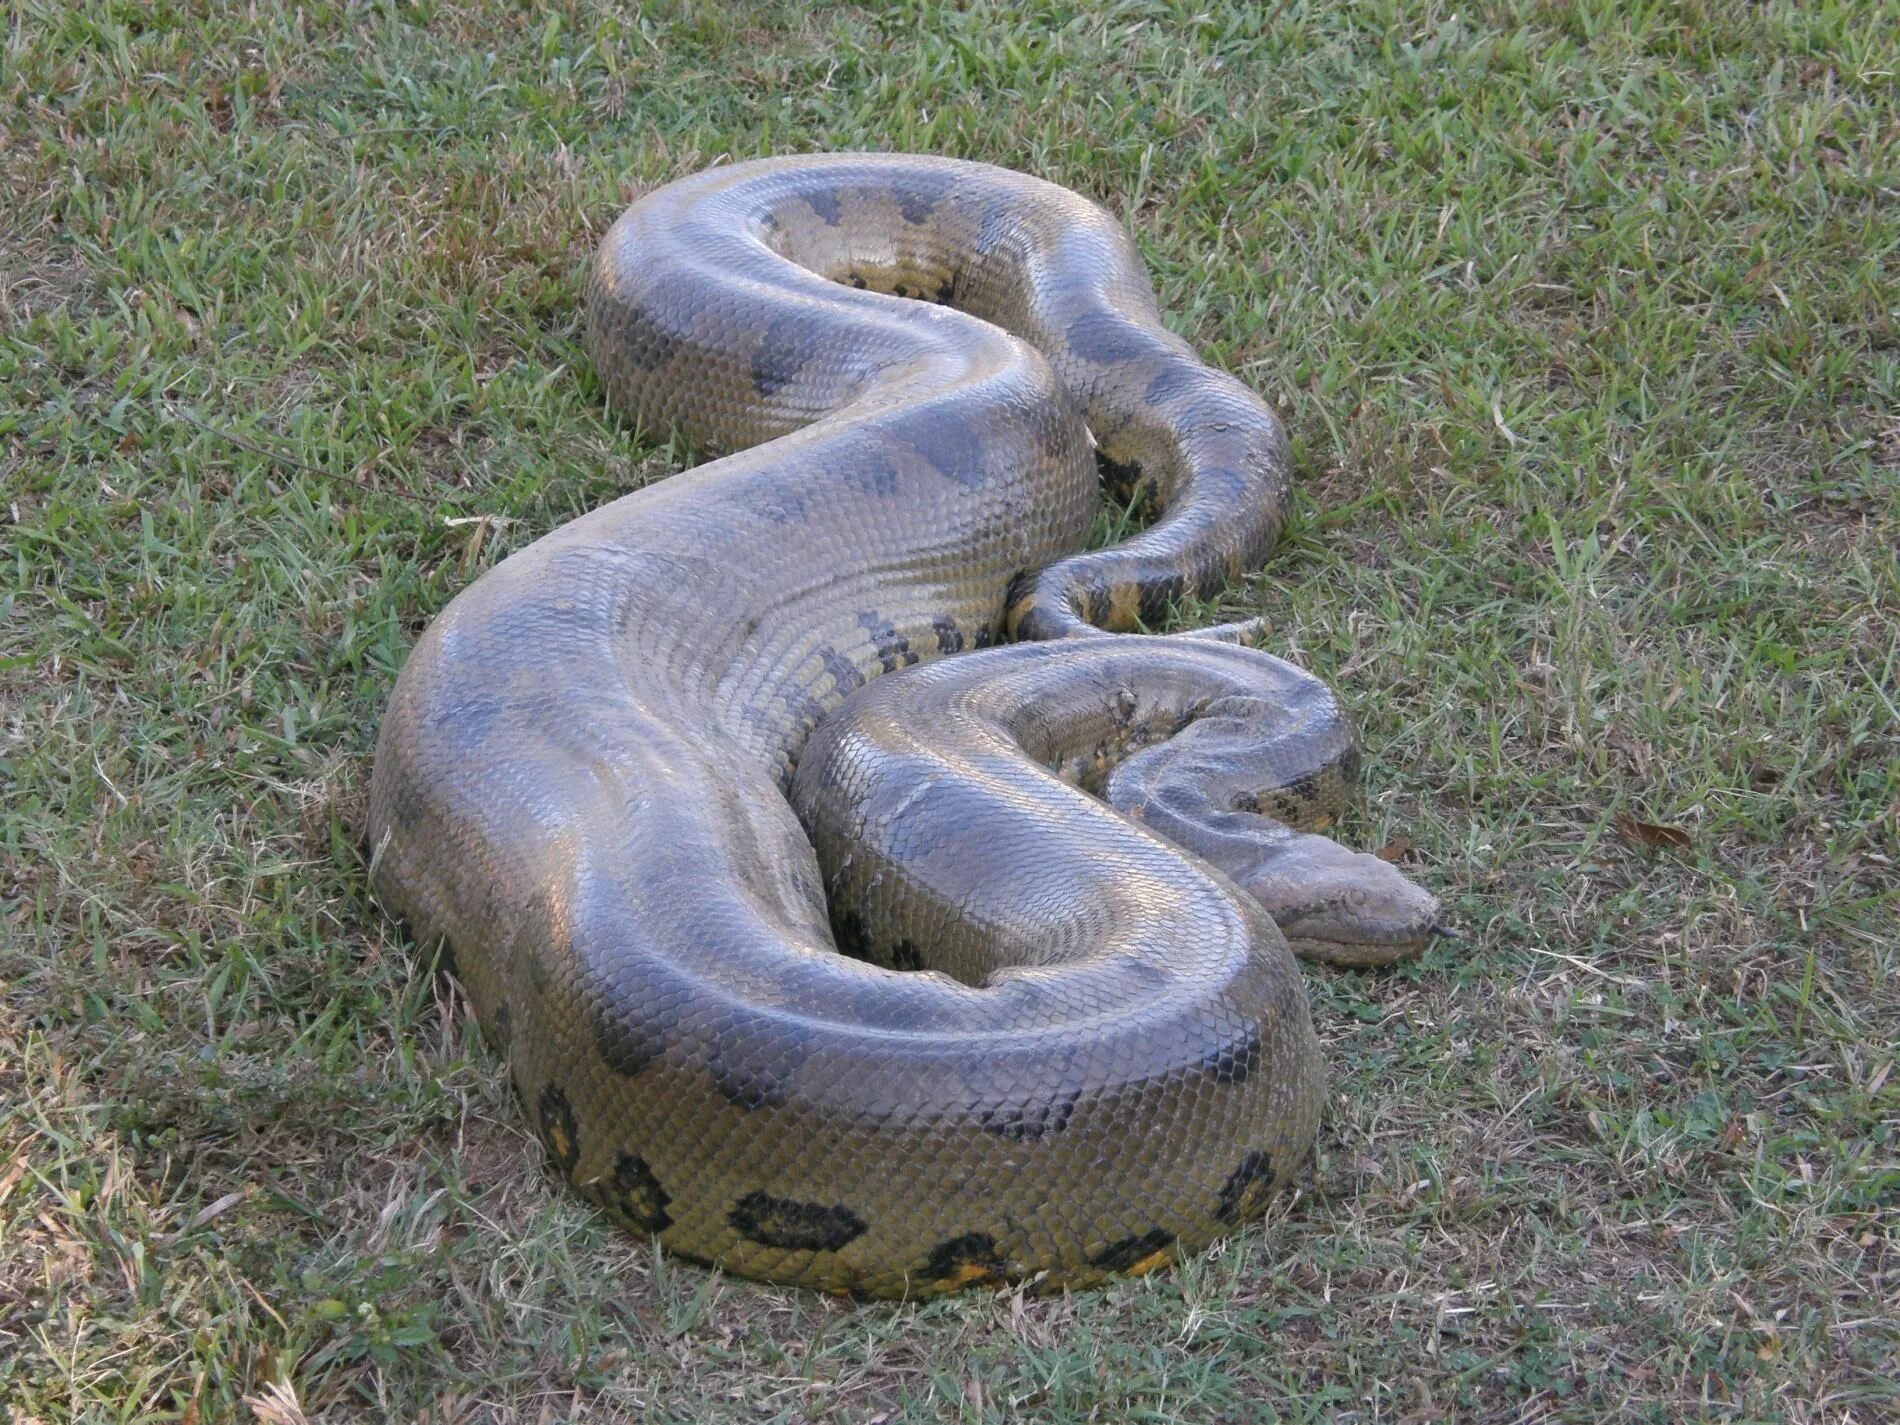 Snakes are longer. Анаконда змея. Водяной удав Анаконда. Ядовитая змея Анаконда. Змея Анаконда гигантская.